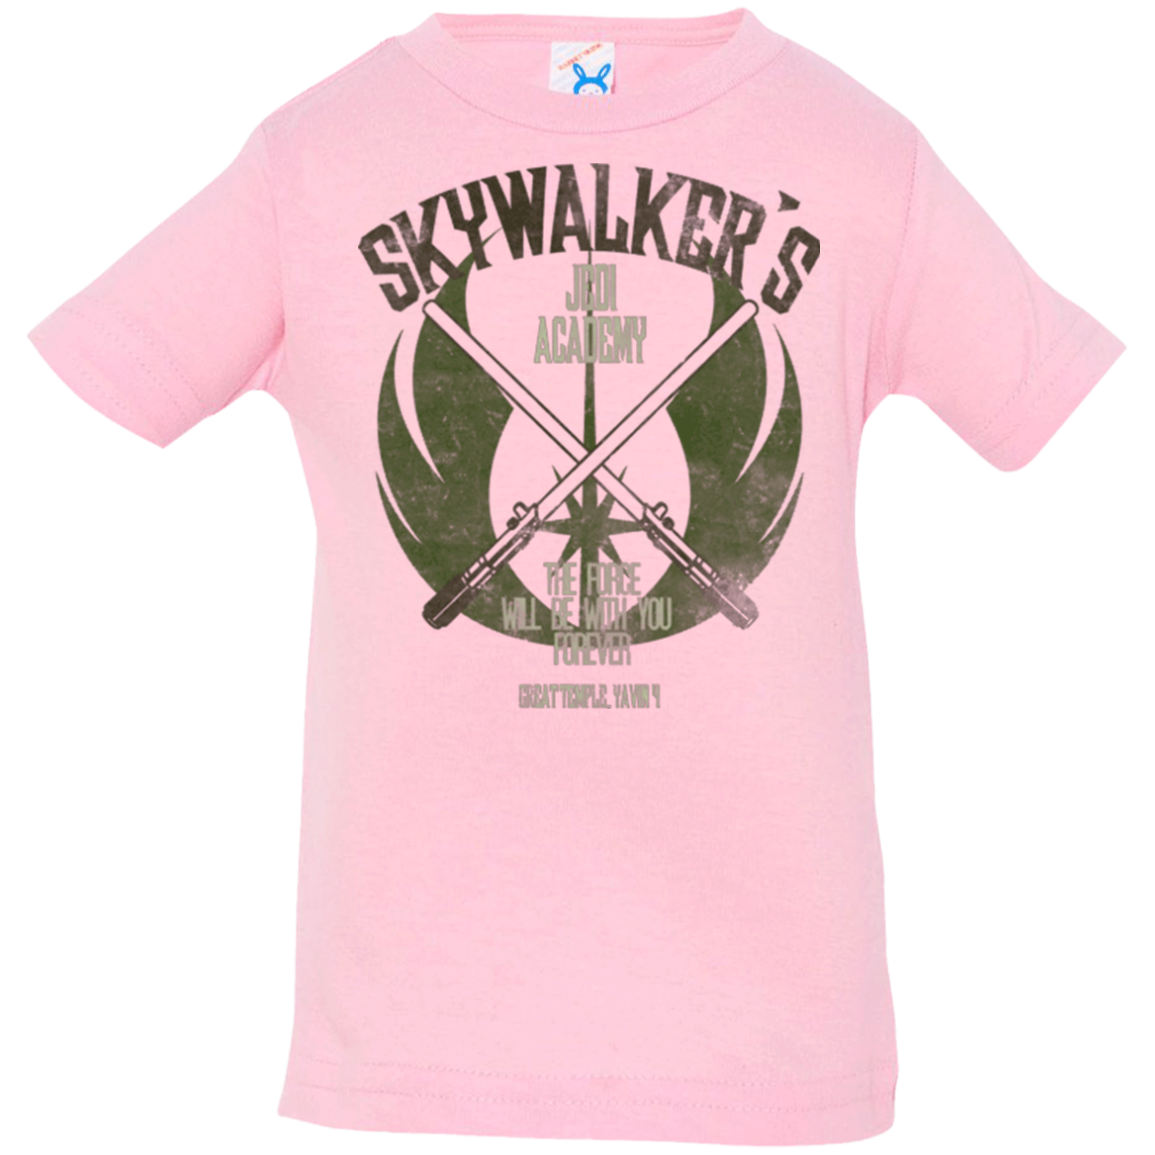 Skywalker's Jedi Academy Infant Premium T-Shirt